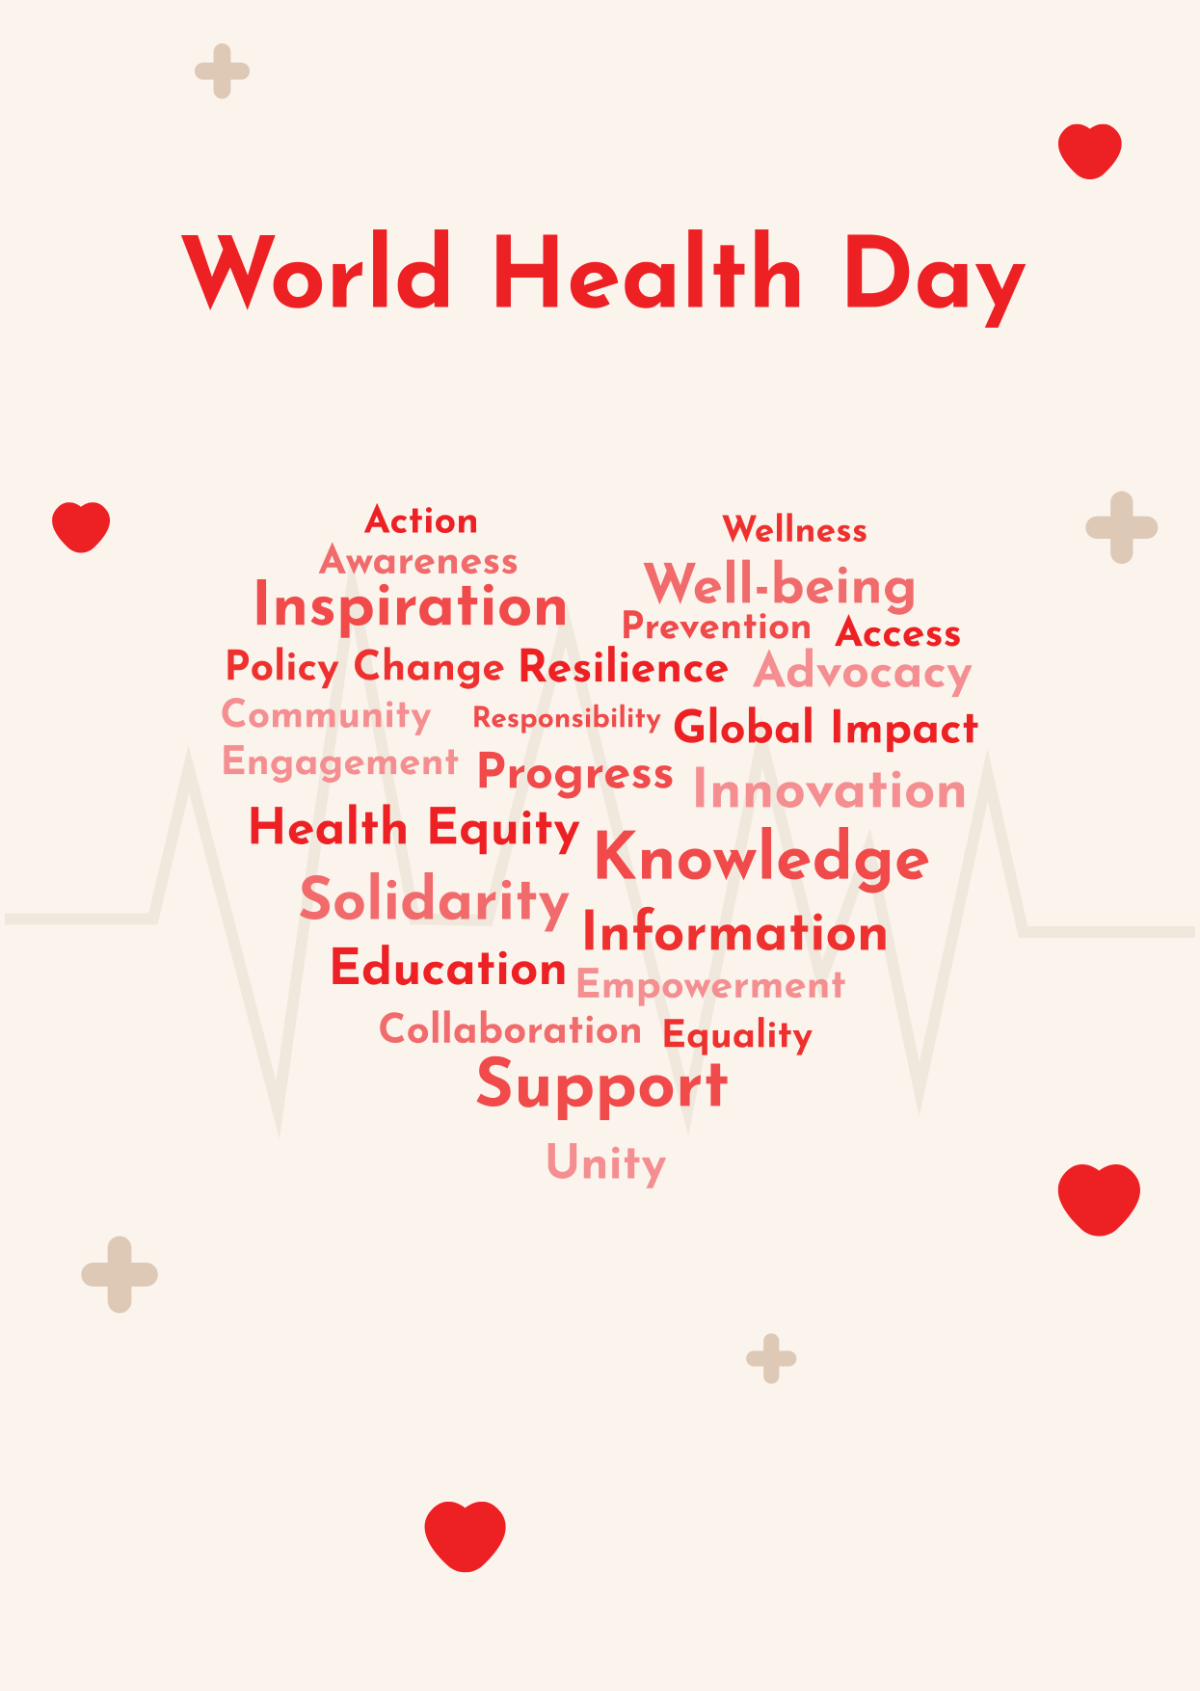 World Health Day Benefits